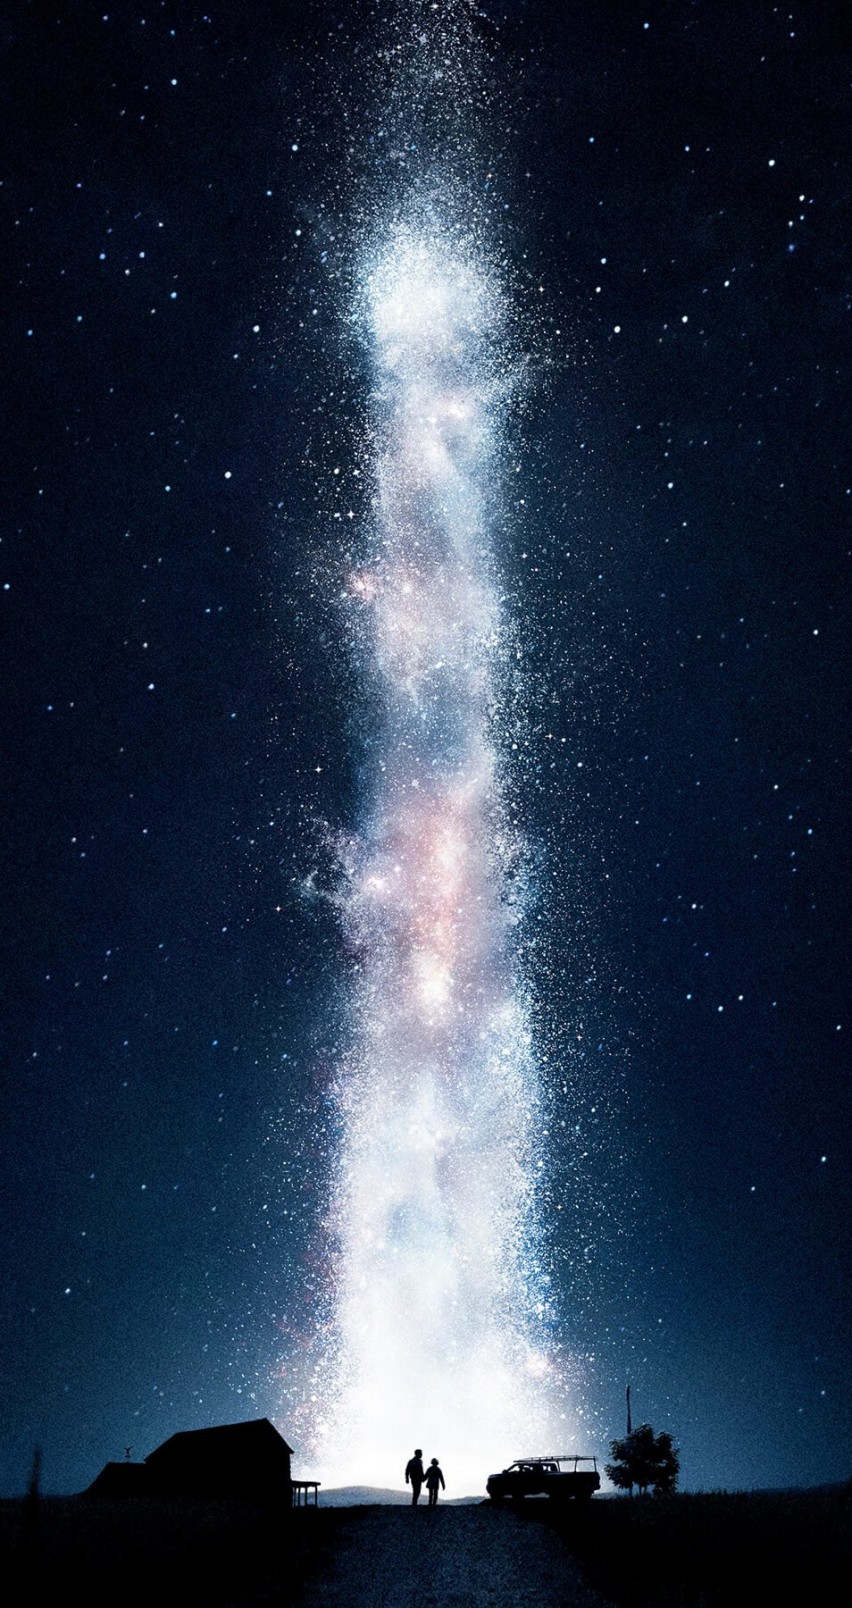 Interstellar (2014) Wallpaper for Apple iPhone 6 / 6s